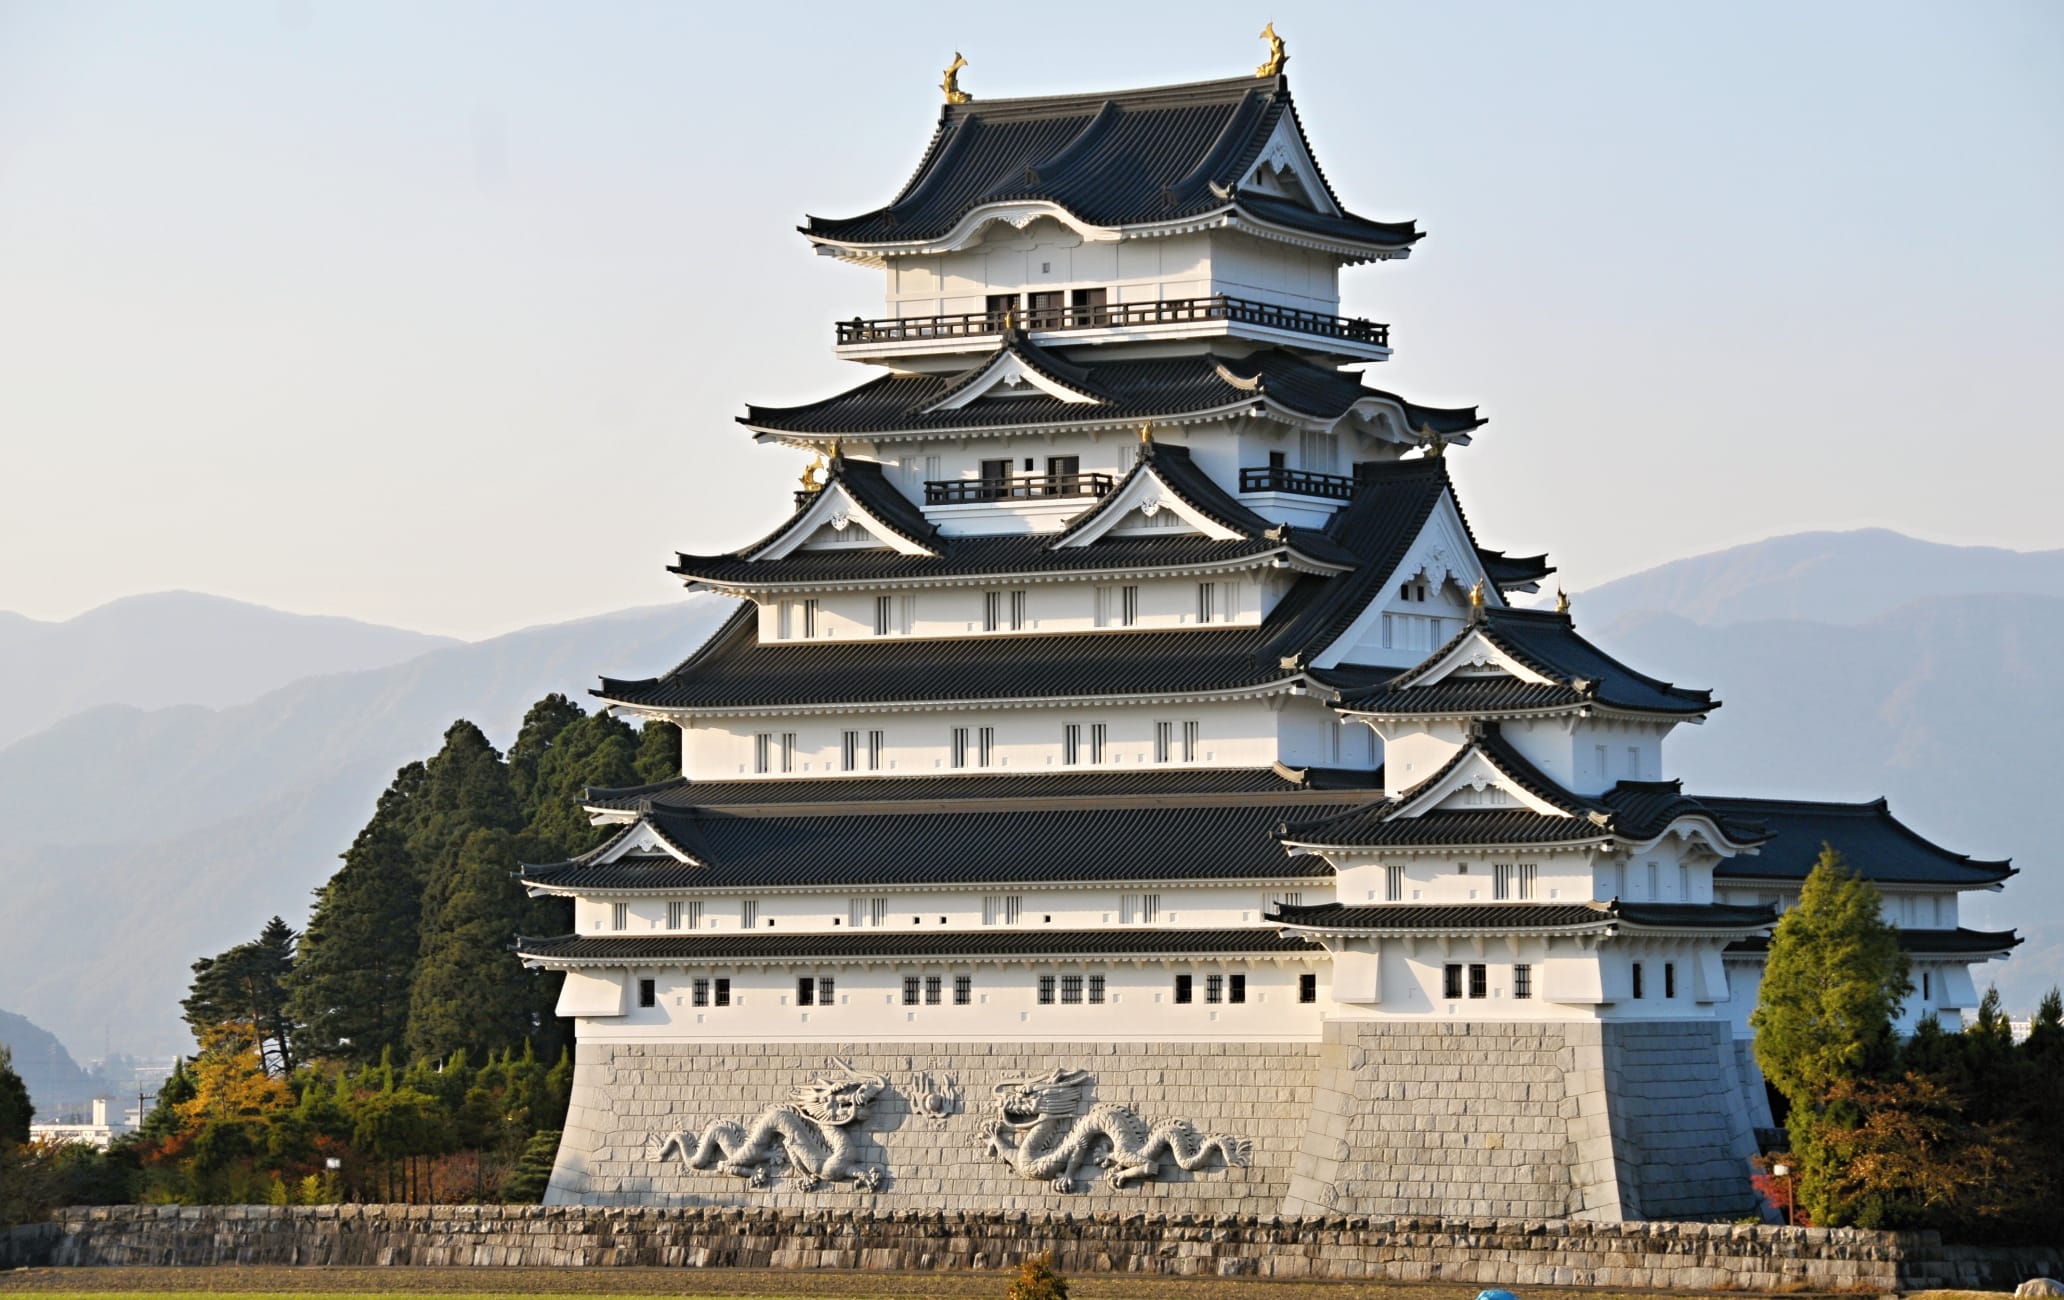 Echizen Katsuyama Castle